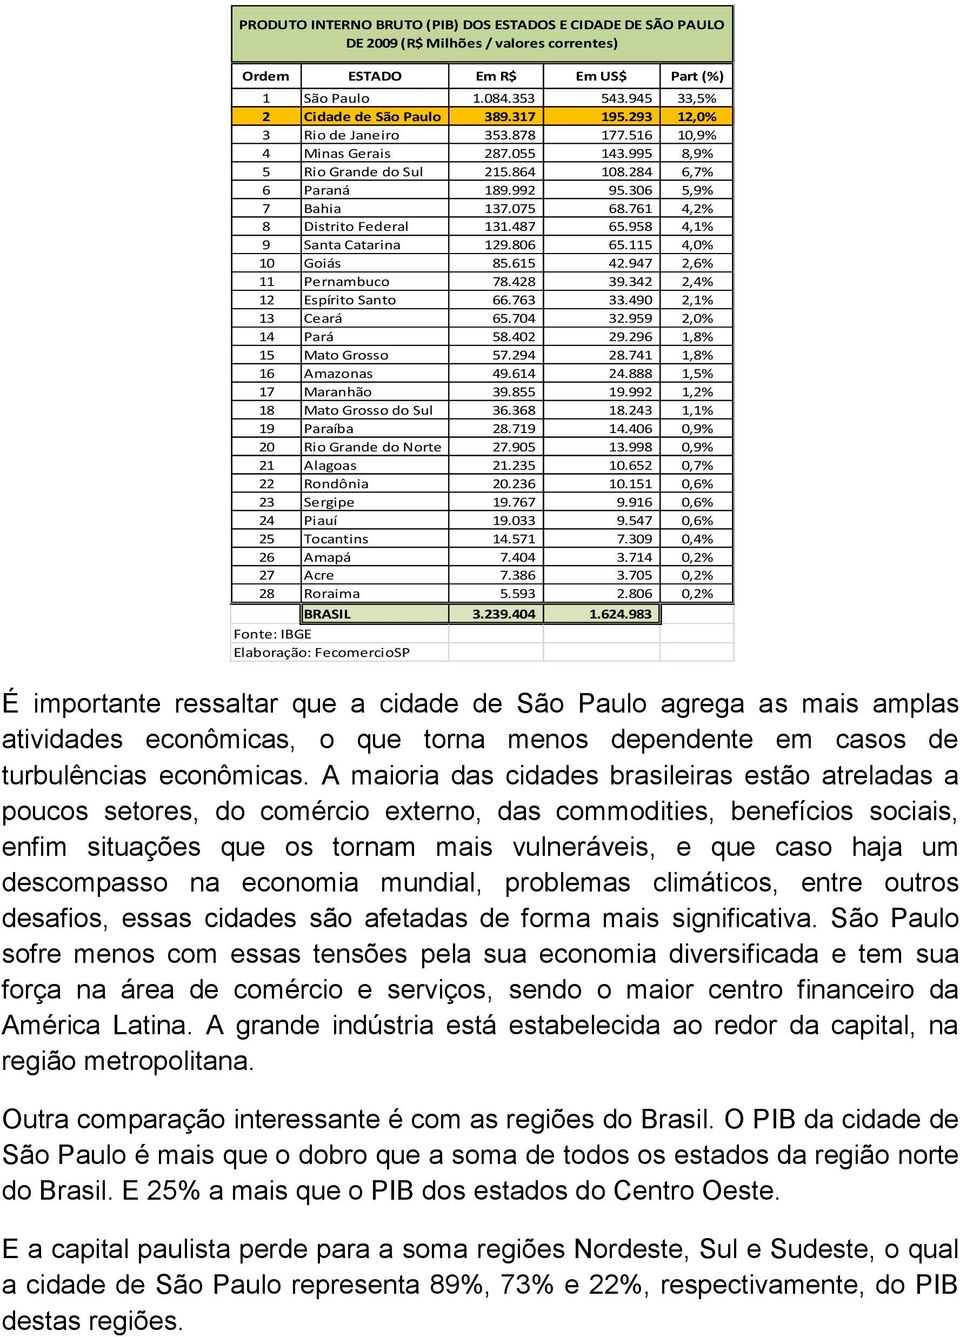 761 4,2% 8 Distrito Federal 131.487 65.958 4,1% 9 Santa Catarina 129.806 65.115 4,0% 10 Goiás 85.615 42.947 2,6% 11 Pernambuco 78.428 39.342 2,4% 12 Espírito Santo 66.763 33.490 2,1% 13 Ceará 65.